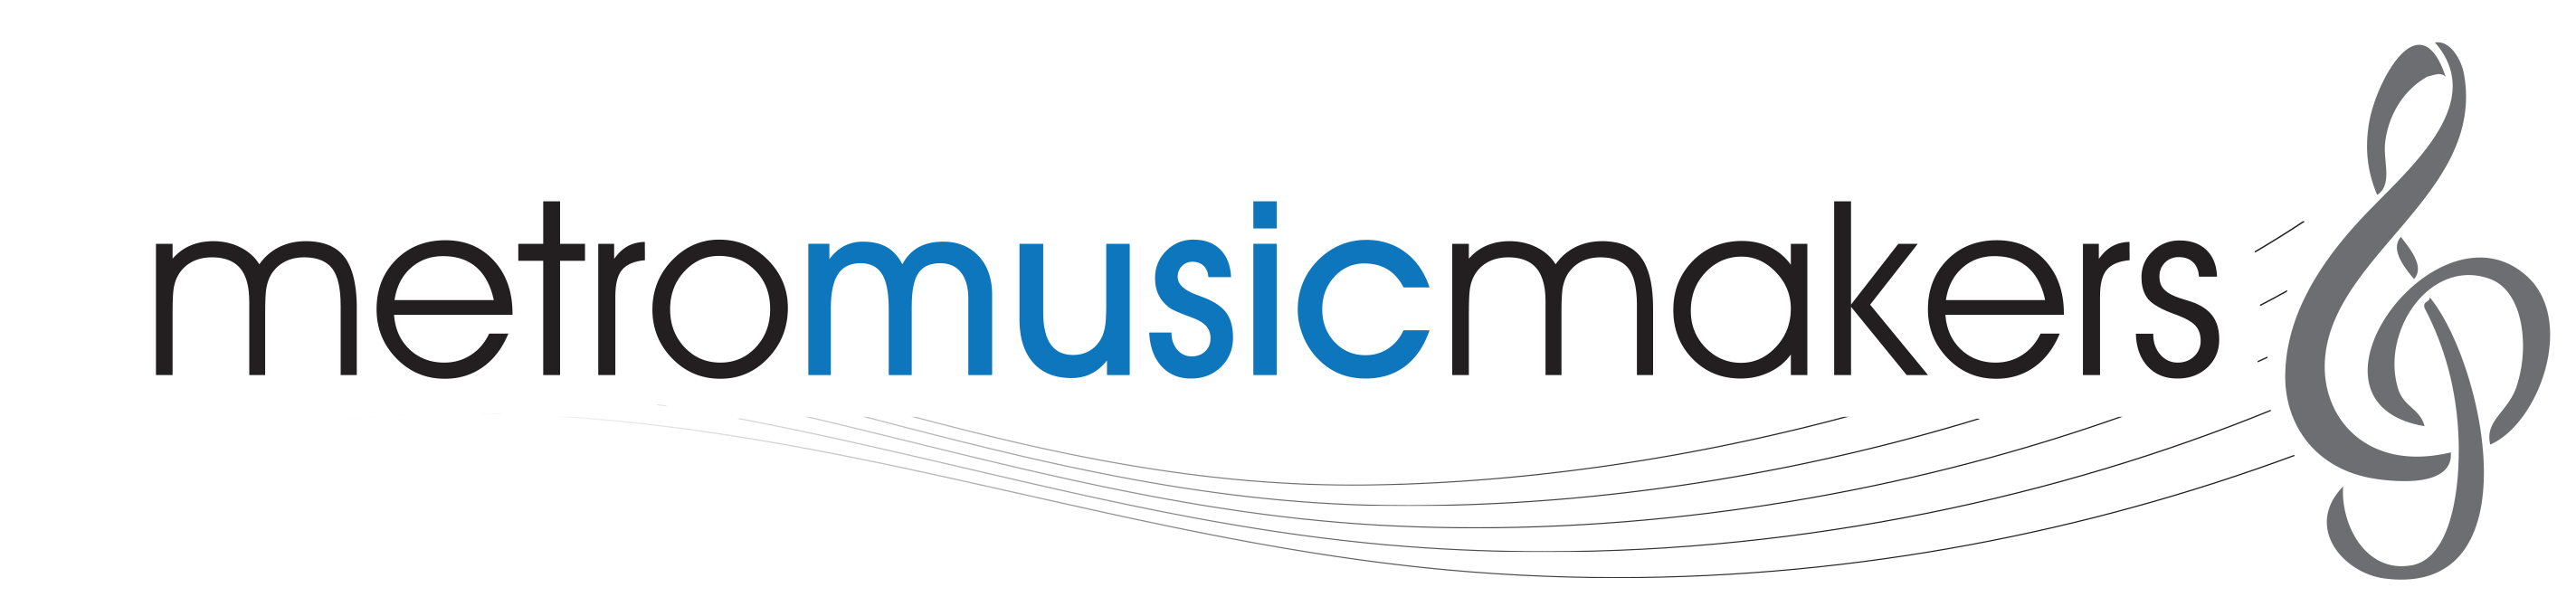 Metro Music Makers logo